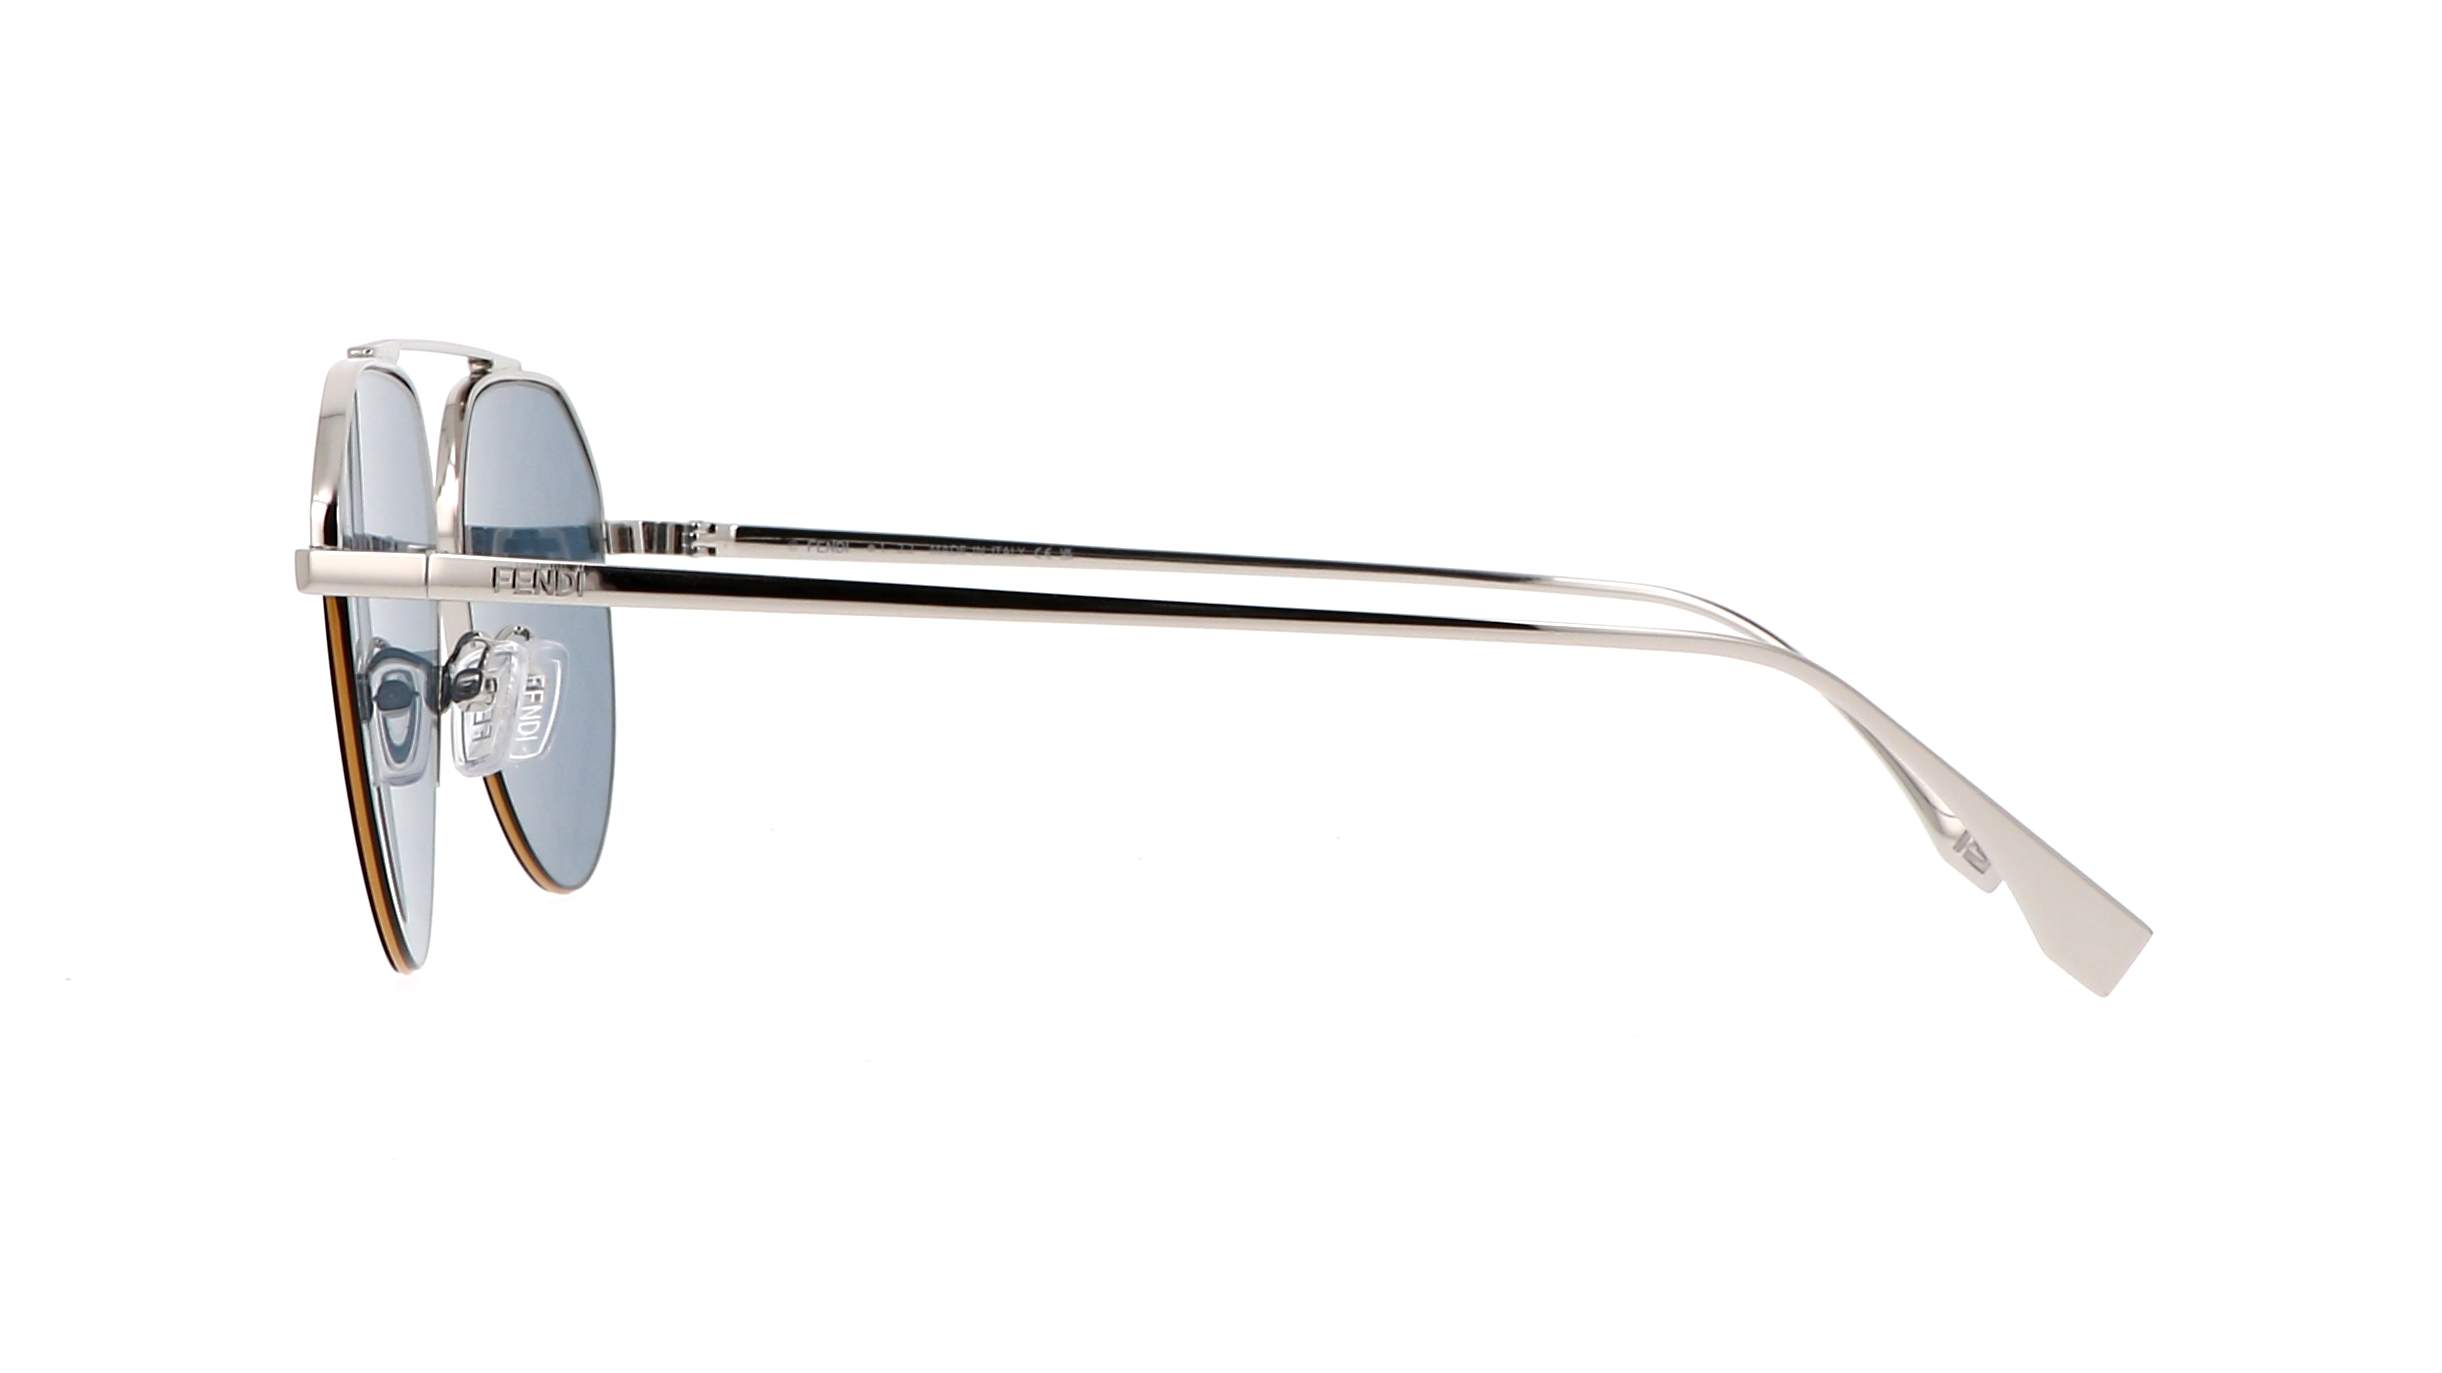 Sunglasses FENDI O'lock FE40049I 5401A 54-17 Black in stock